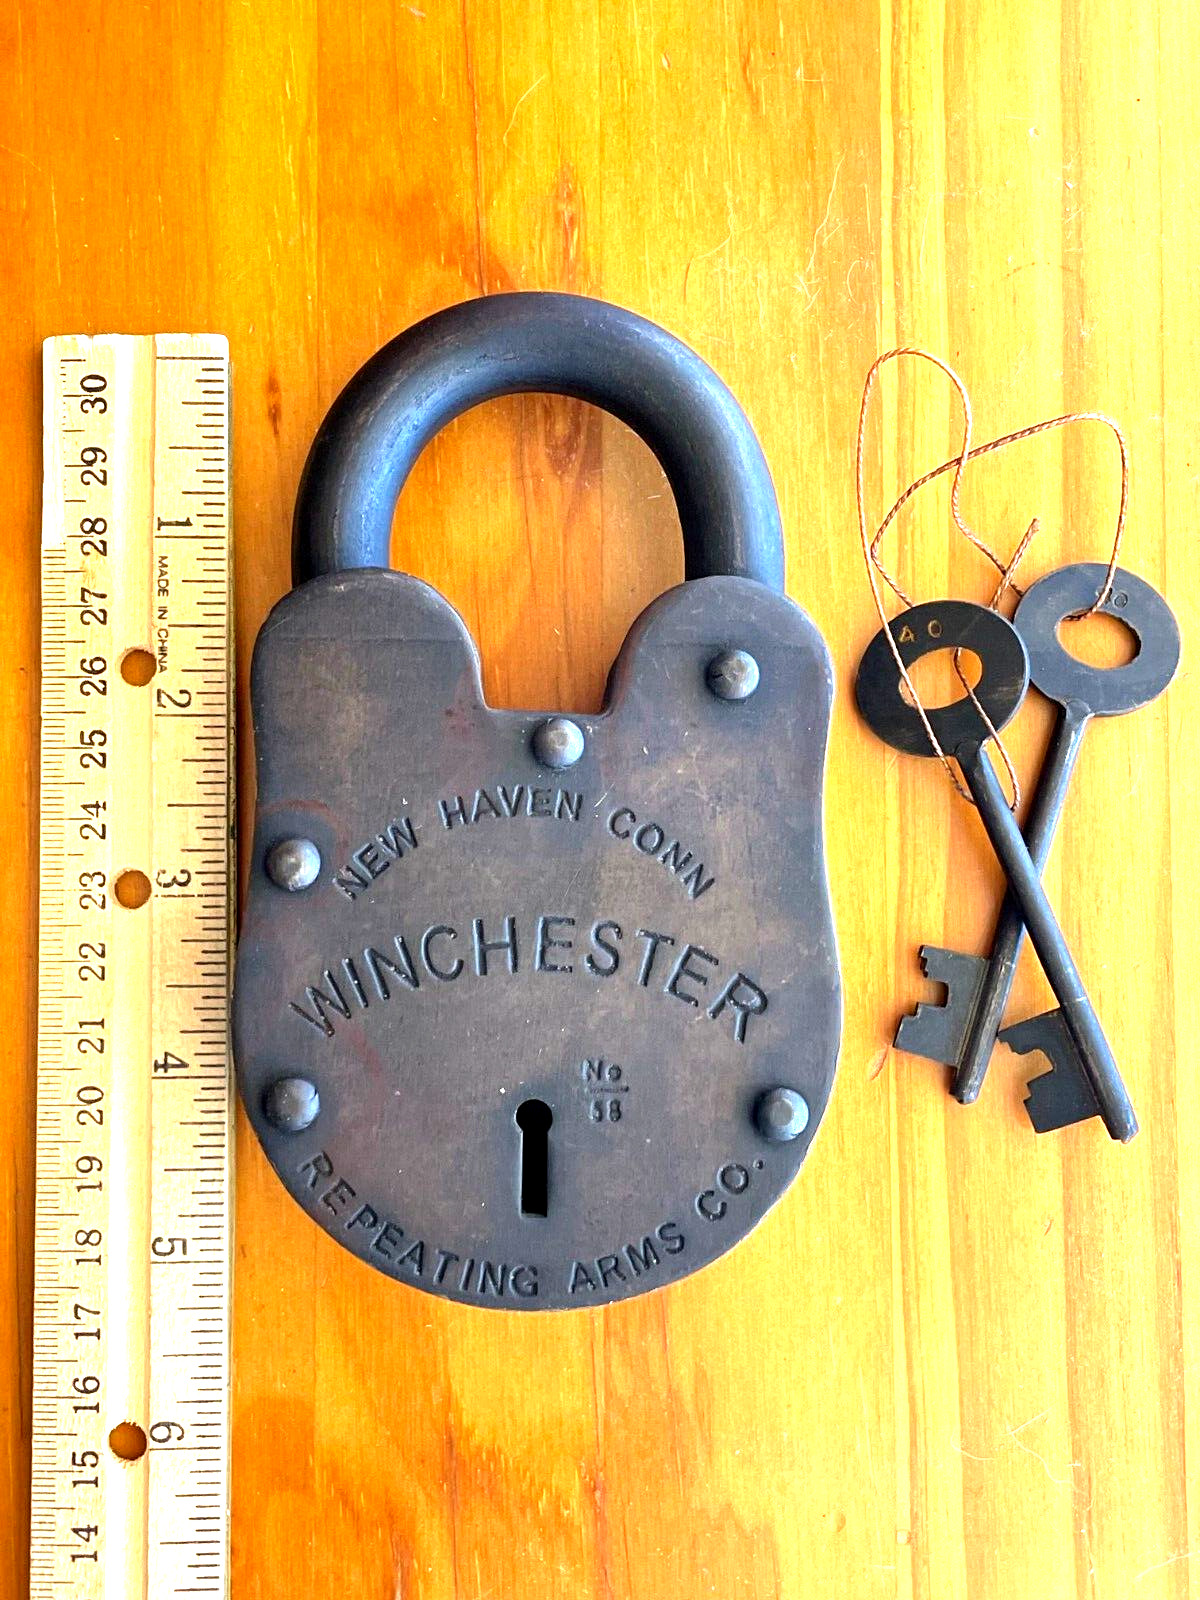 Winchester Firearms Padlock, Large Cast Iron Lock, Antique Finish 2 Keys Works